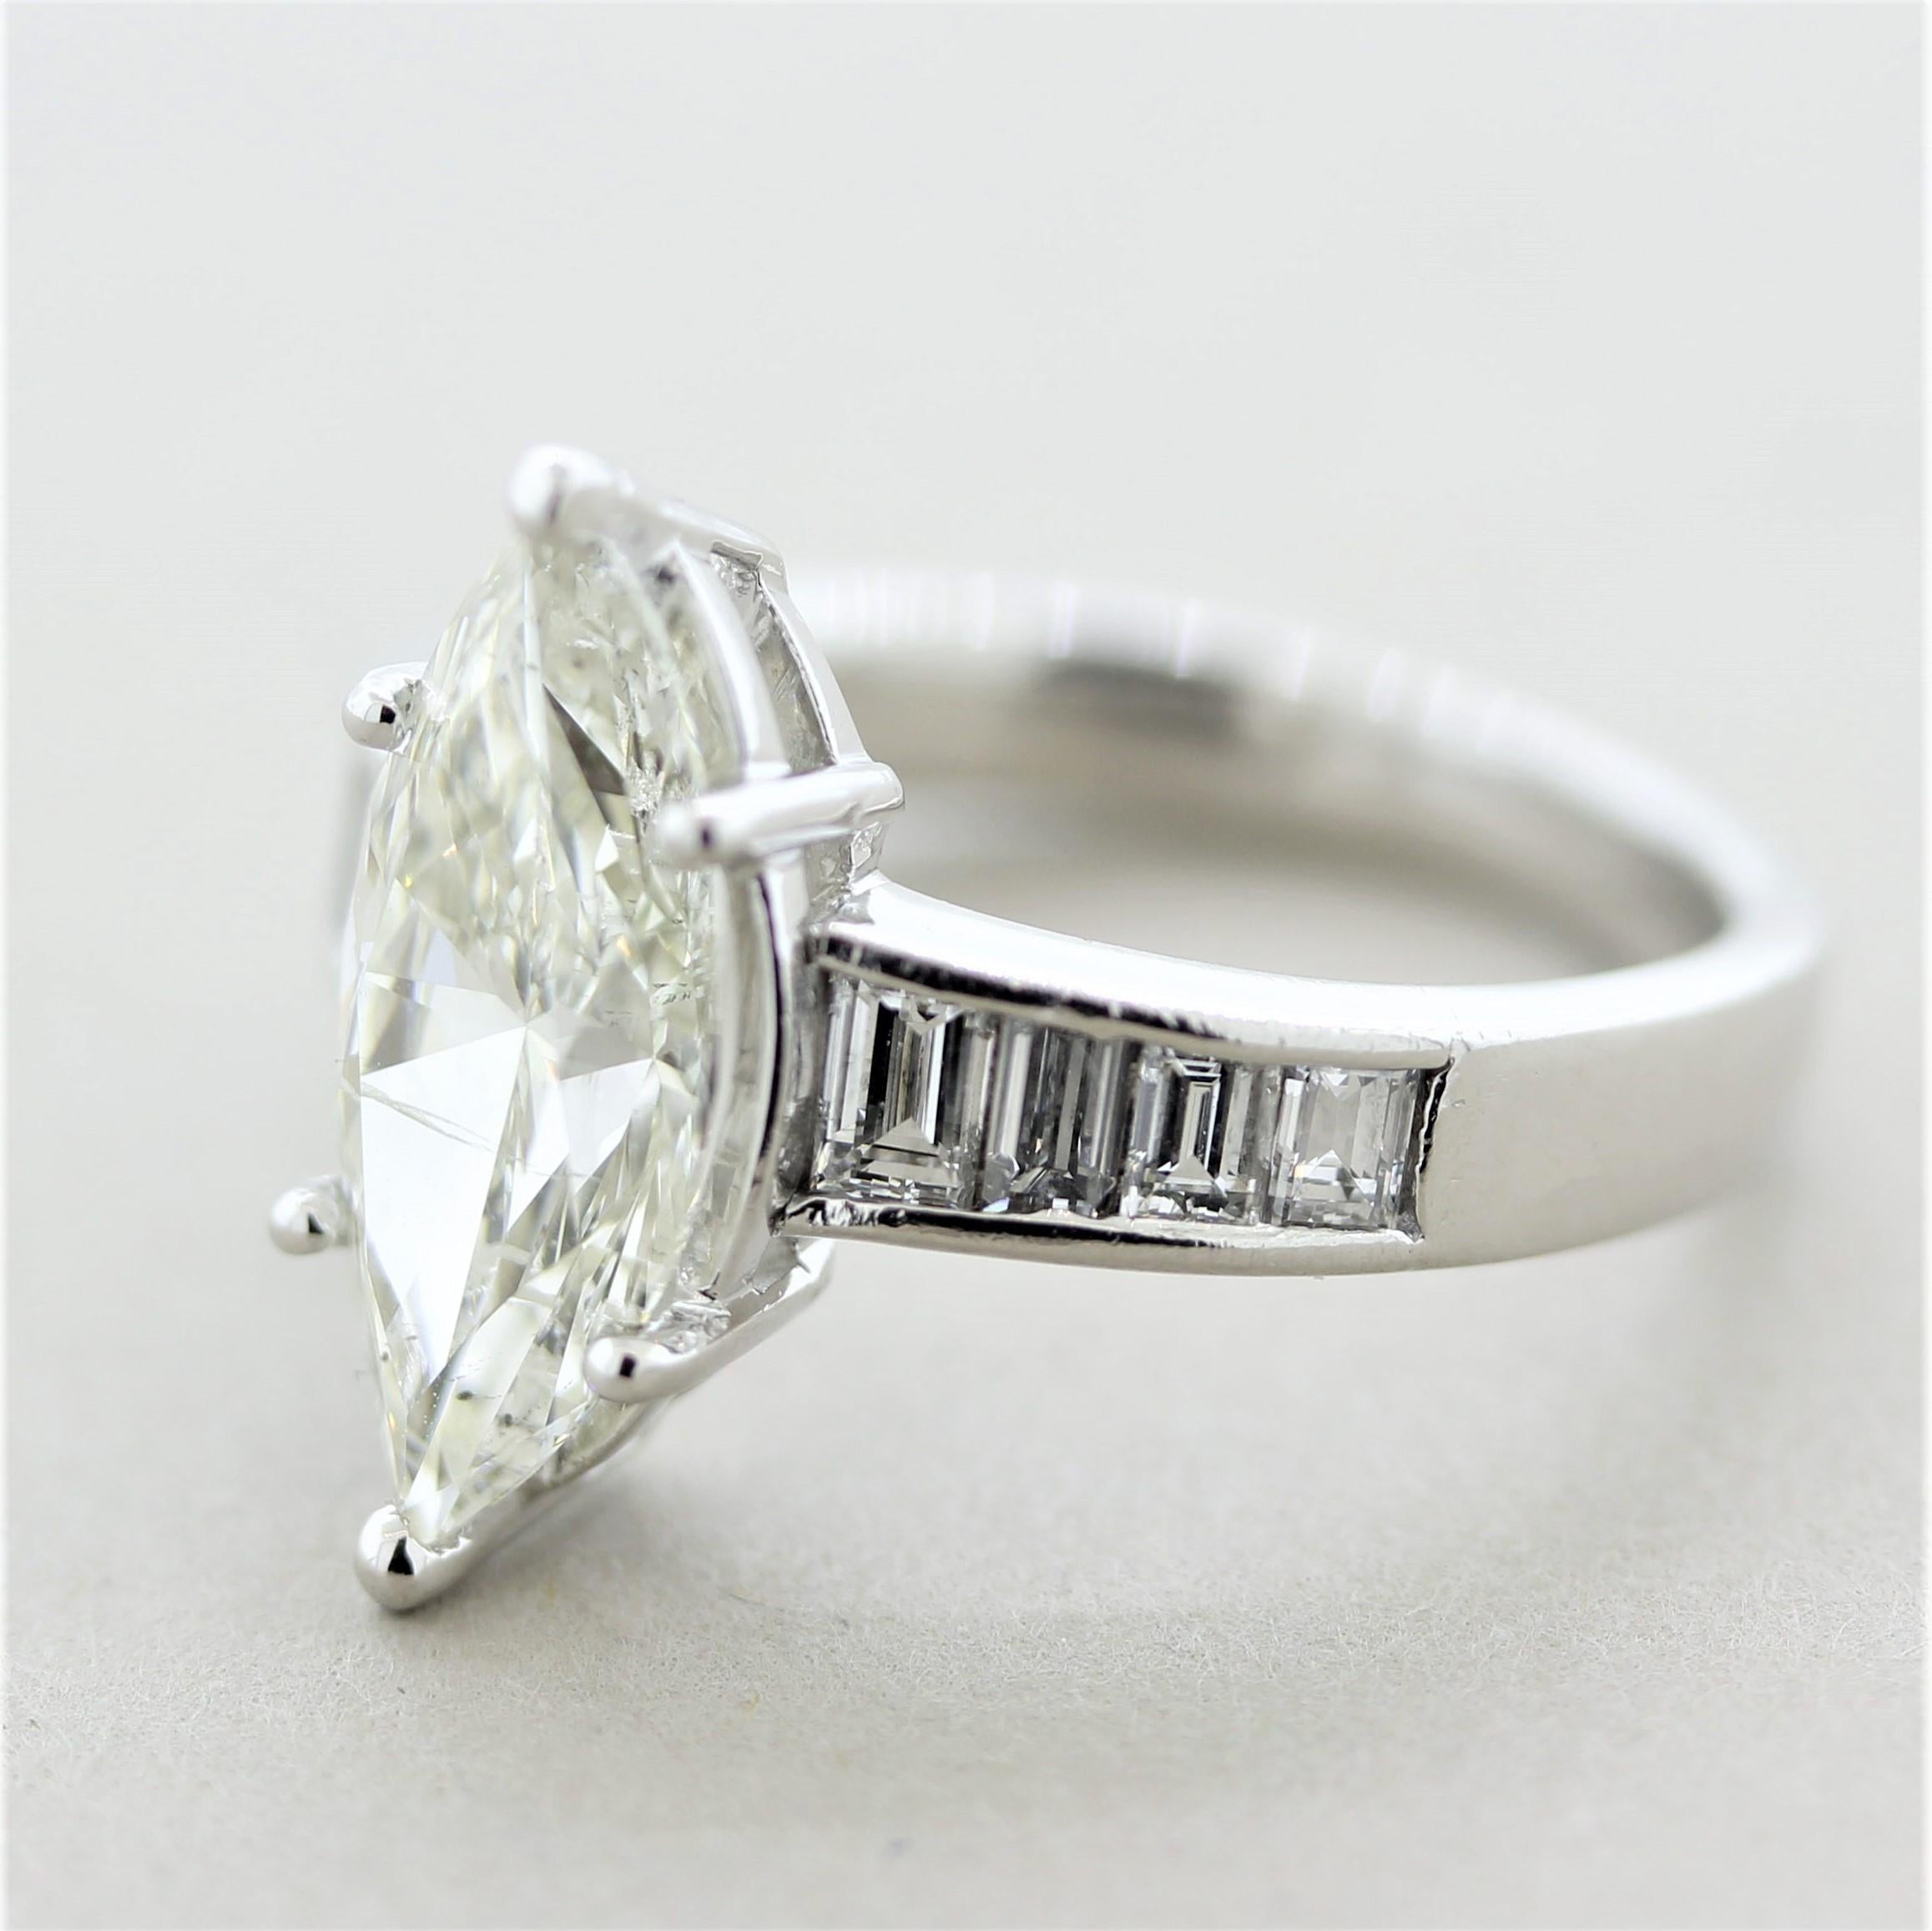 2.5 carat marquise diamond ring